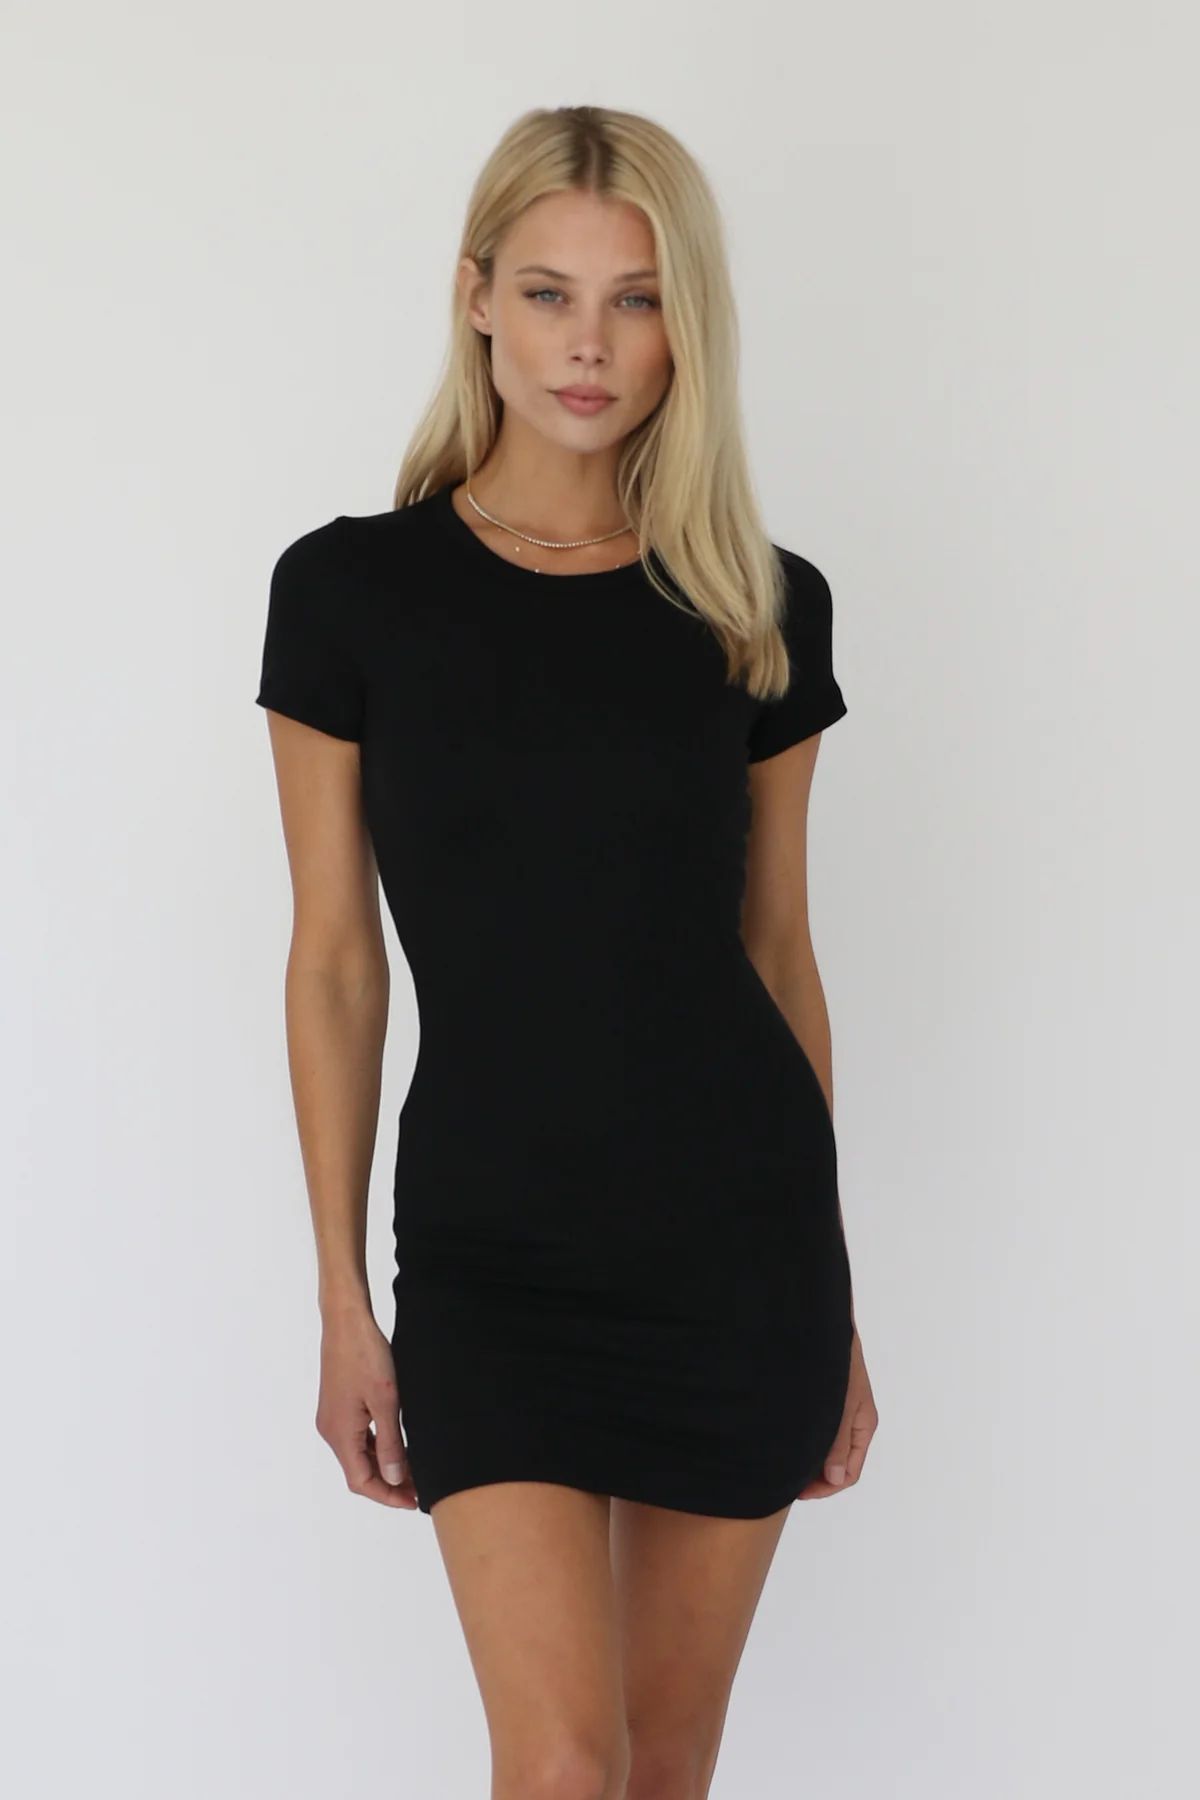 Baby Tee Dress - Black | Skatie LLC